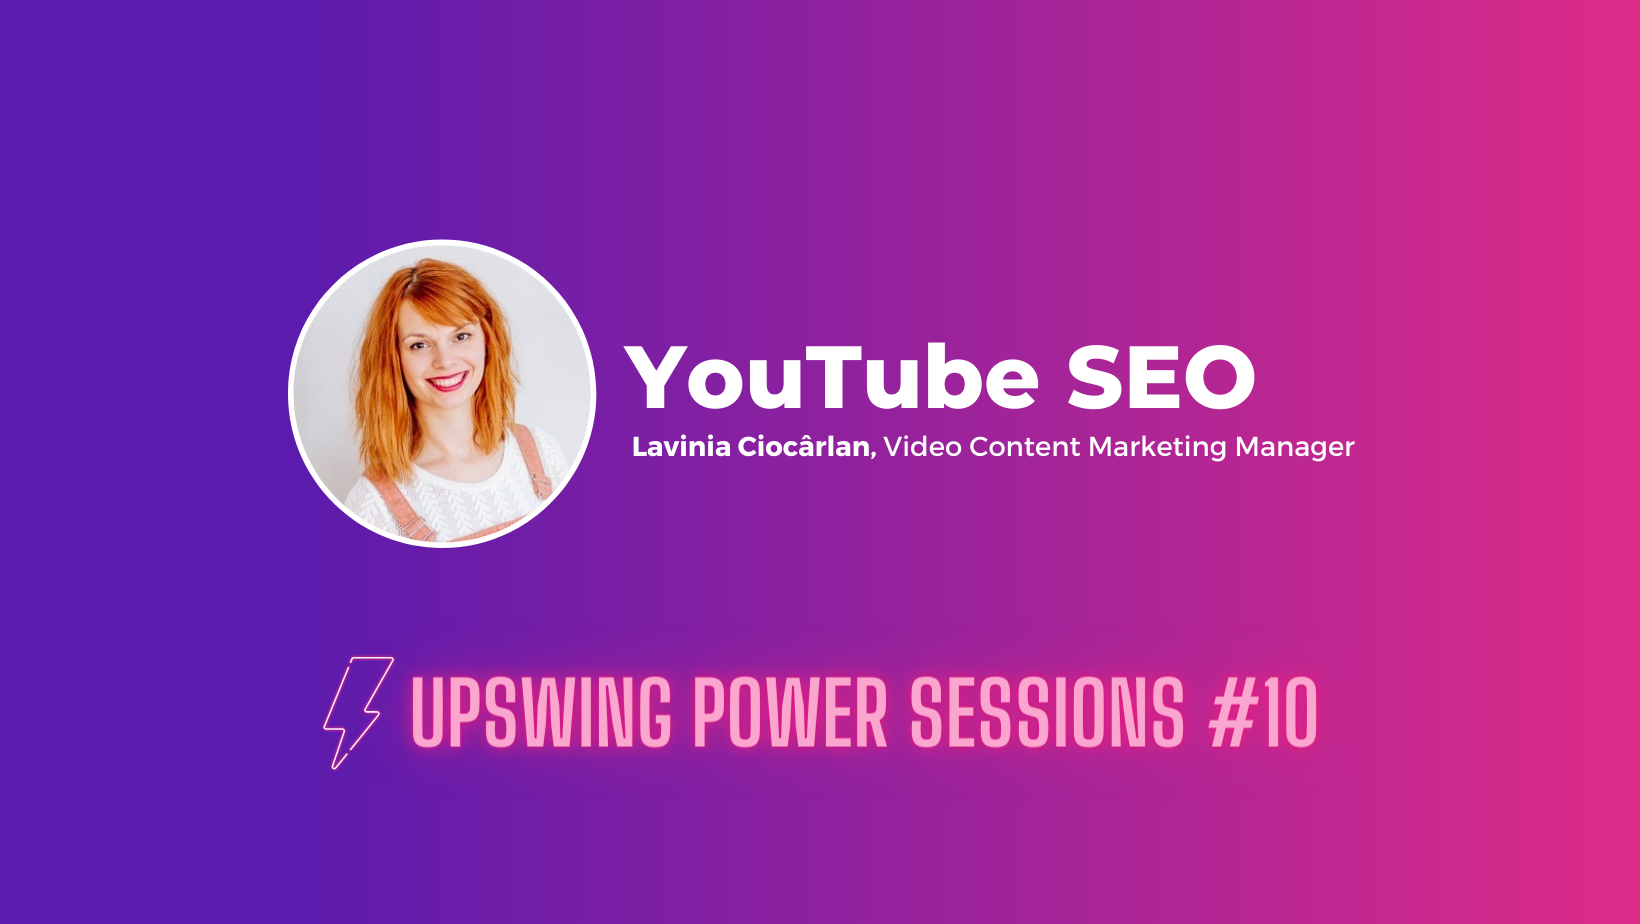 Upswing Power Sessions - Ediția #10 - Lavinia Ciocarlan despre YouTube SEO & Video Content Marketing - Upswing SEO Agency